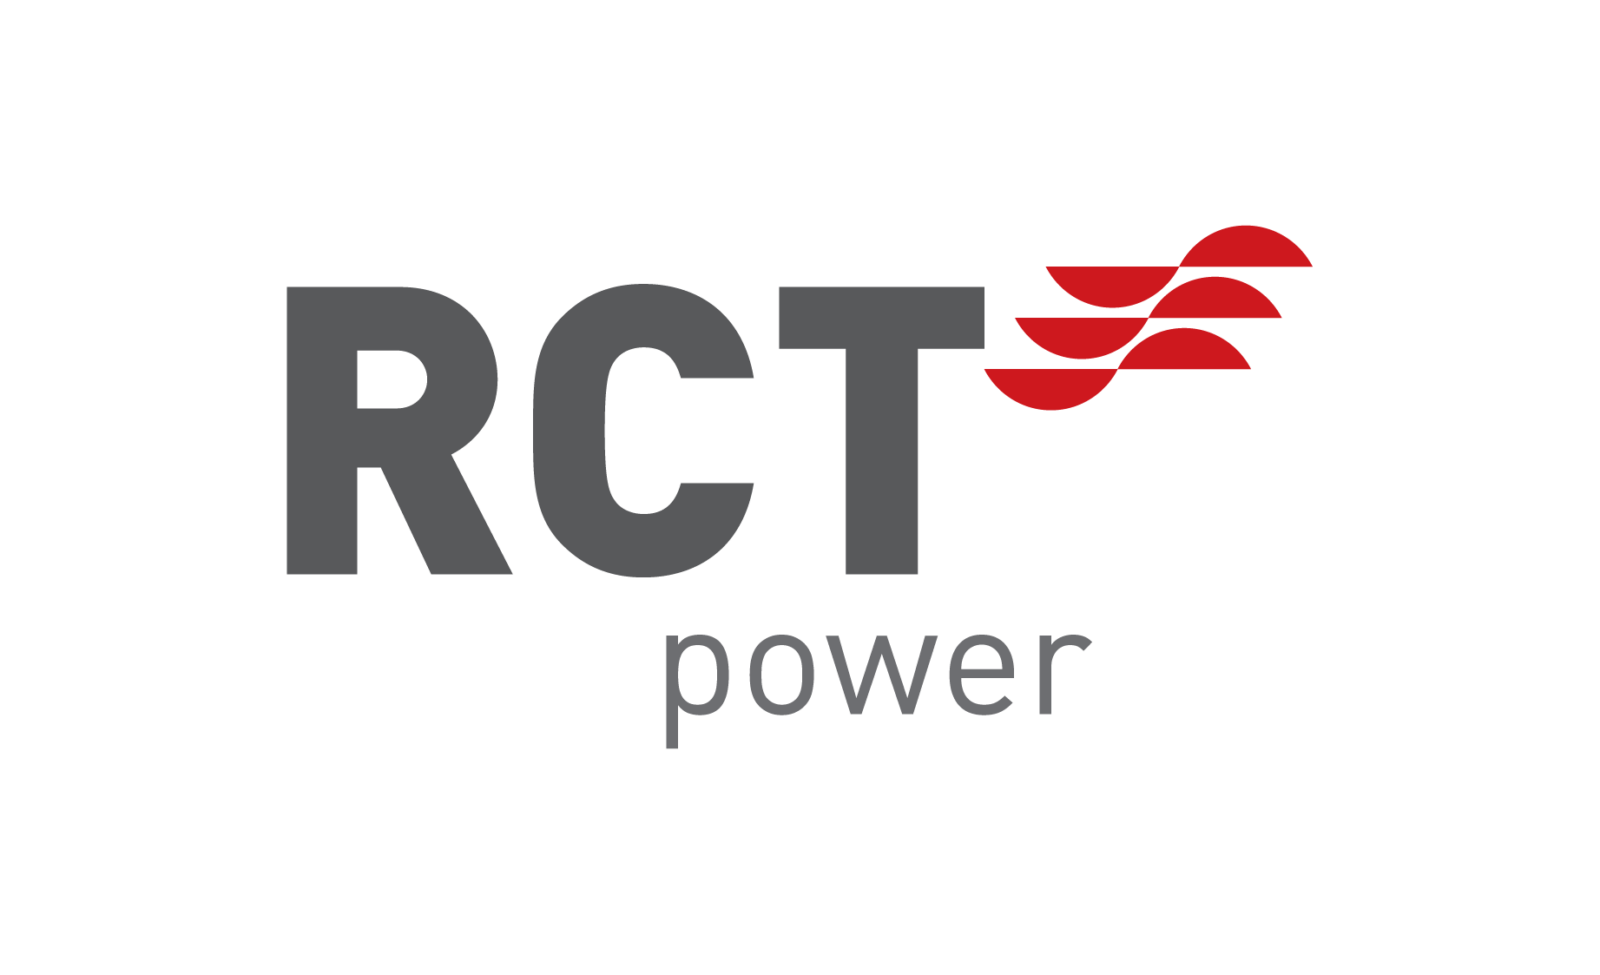 RCT POWER-LOGO RGB 300ppi